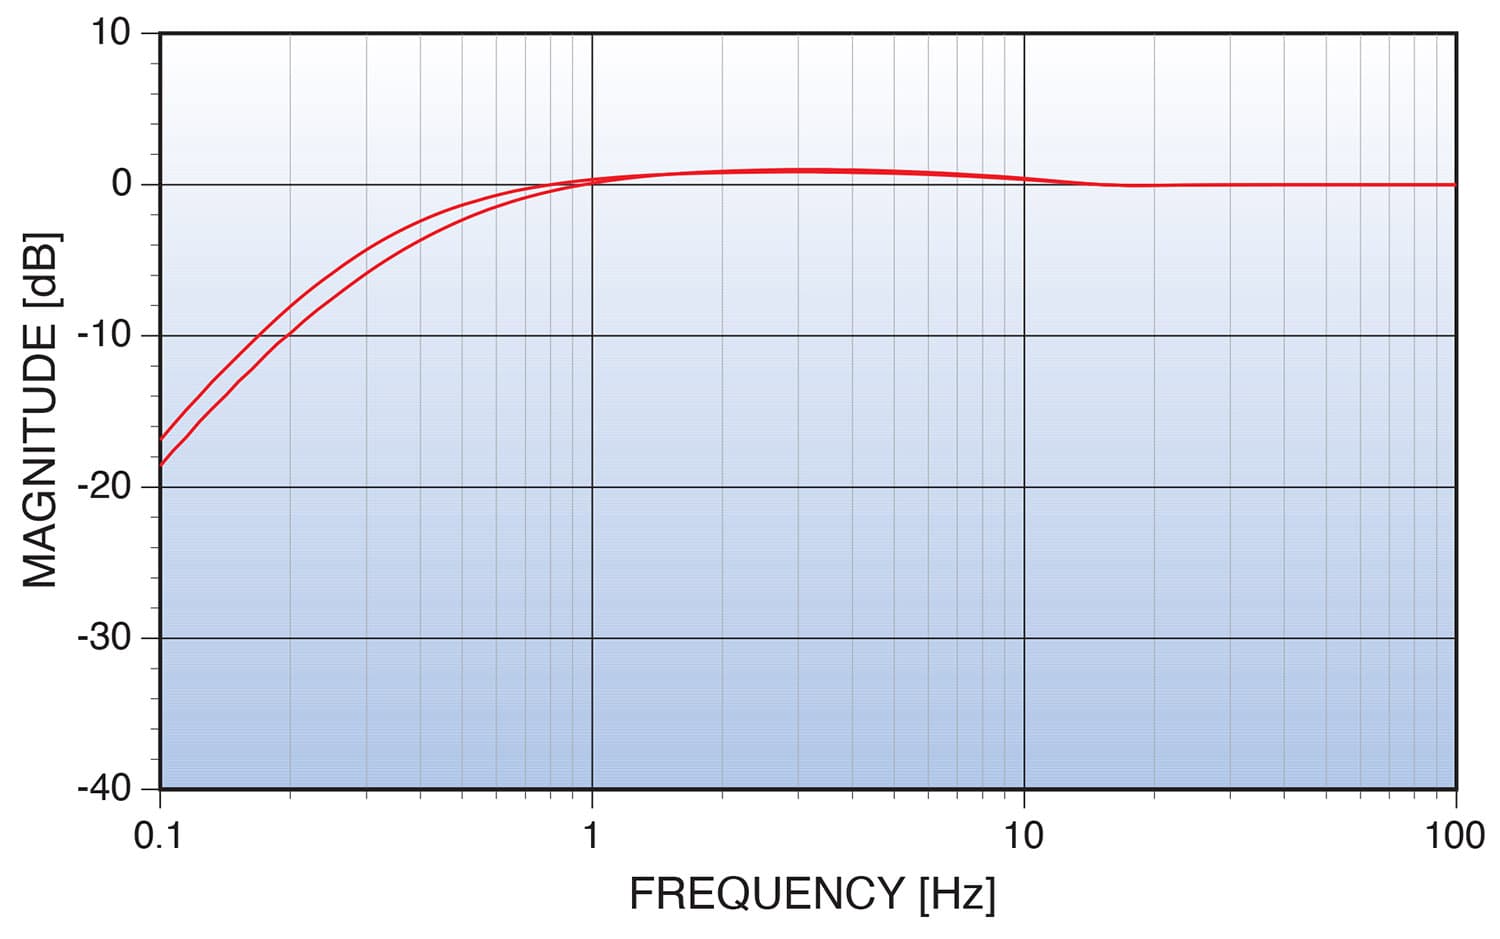 Figure 2: BE FX50 analog FM exciter infrasonic response.